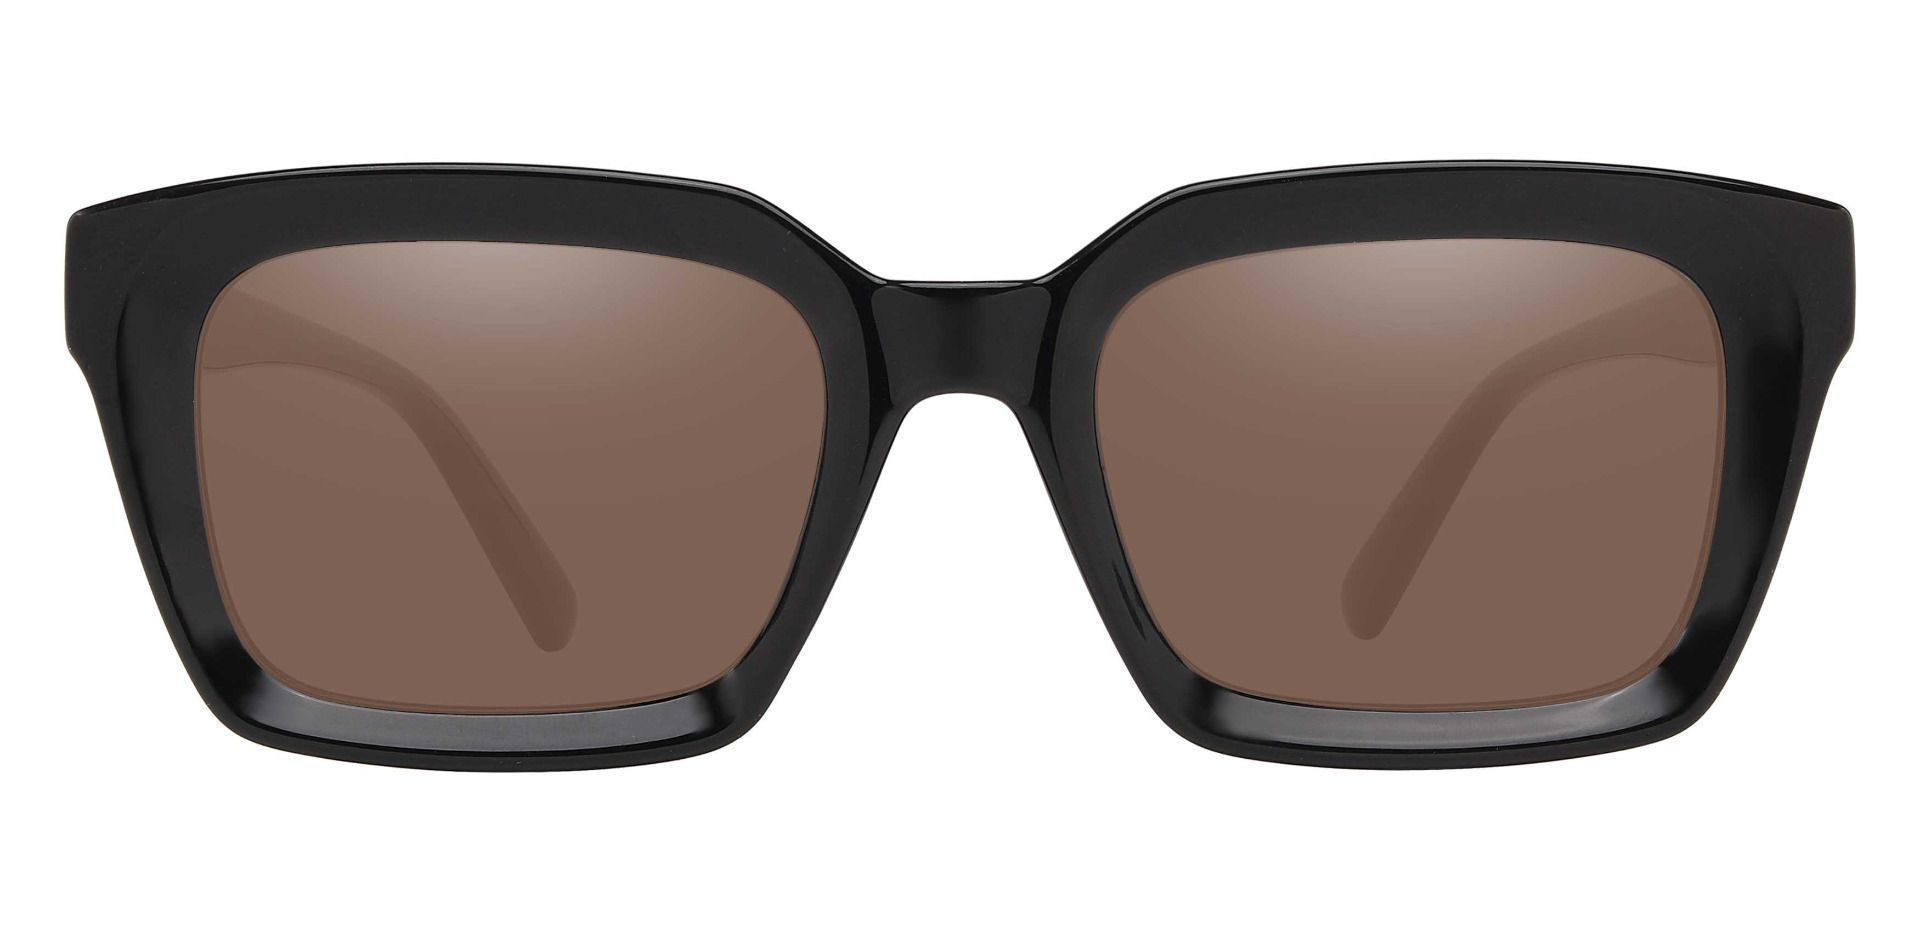 Unity Rectangle Progressive Sunglasses - Black Frame With Brown Lenses